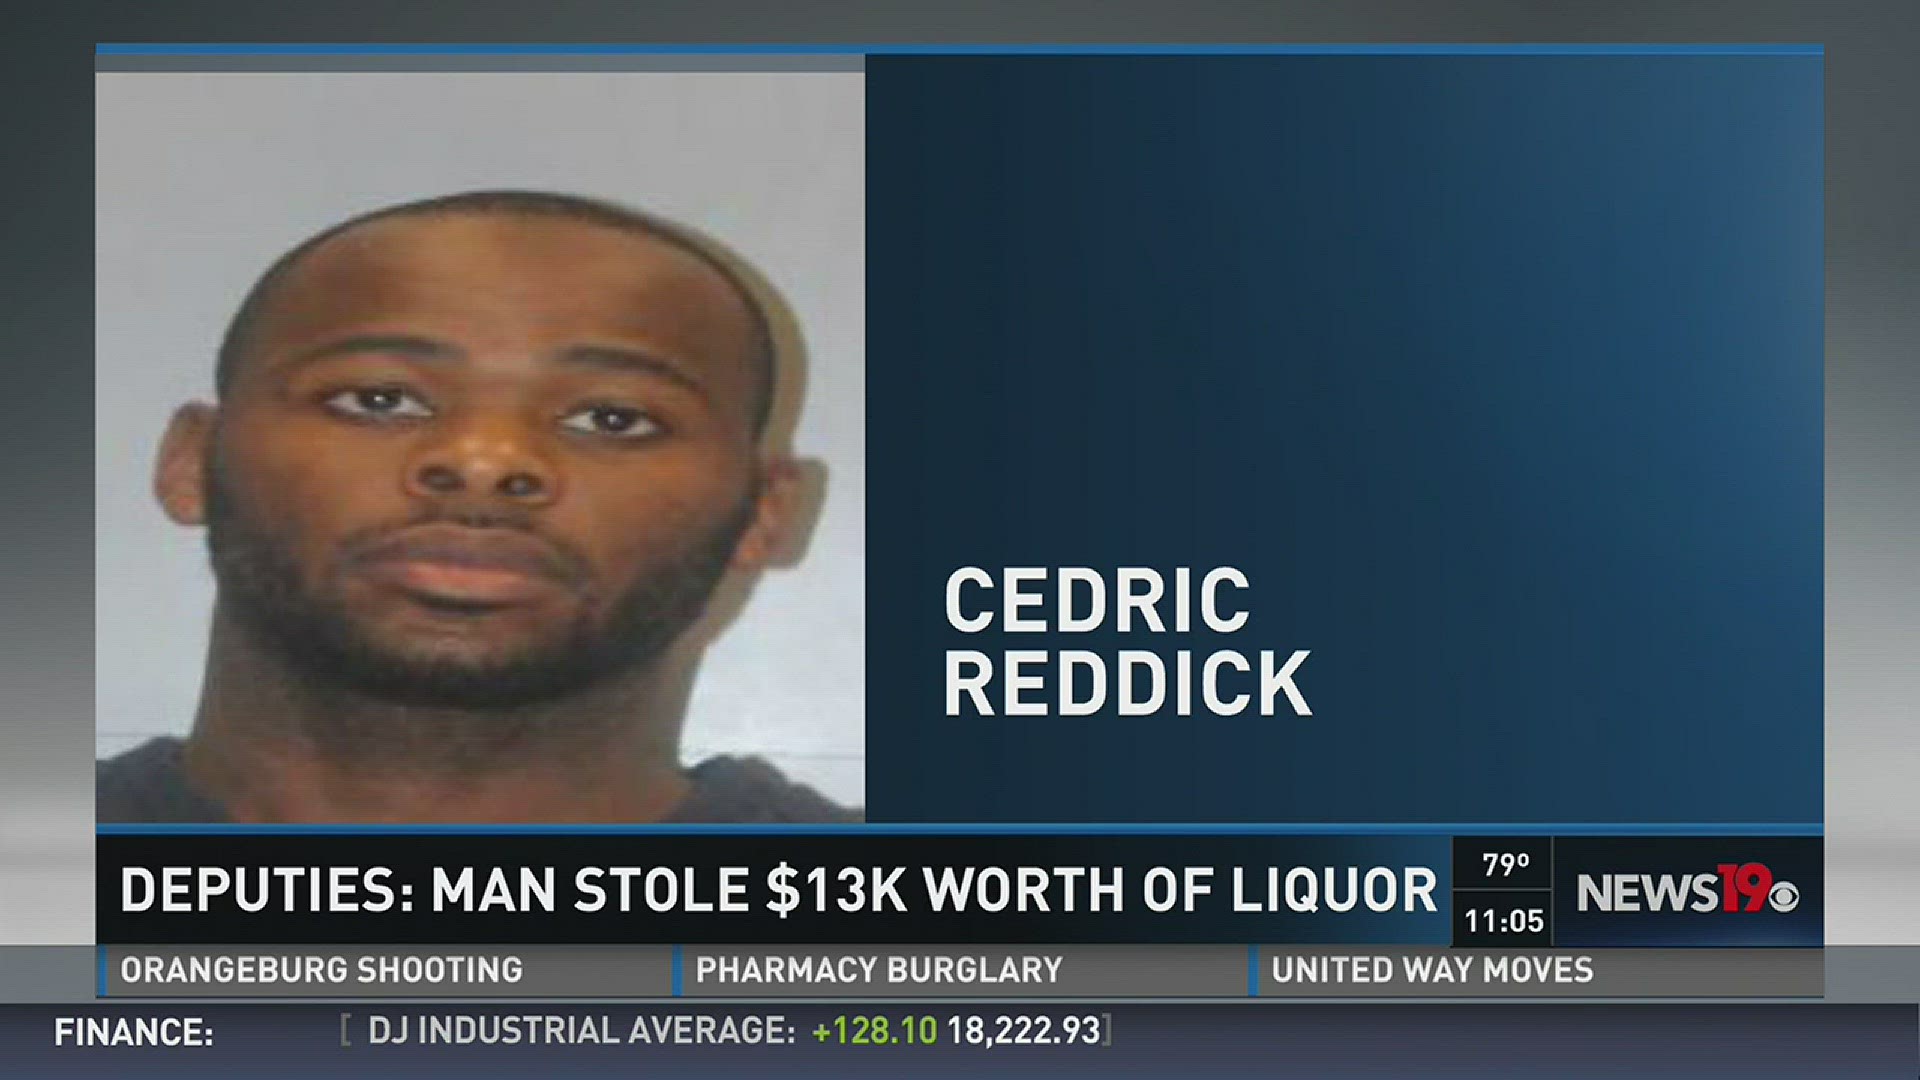 Deputies: Cedric Reddick stole $13K worth of liquor